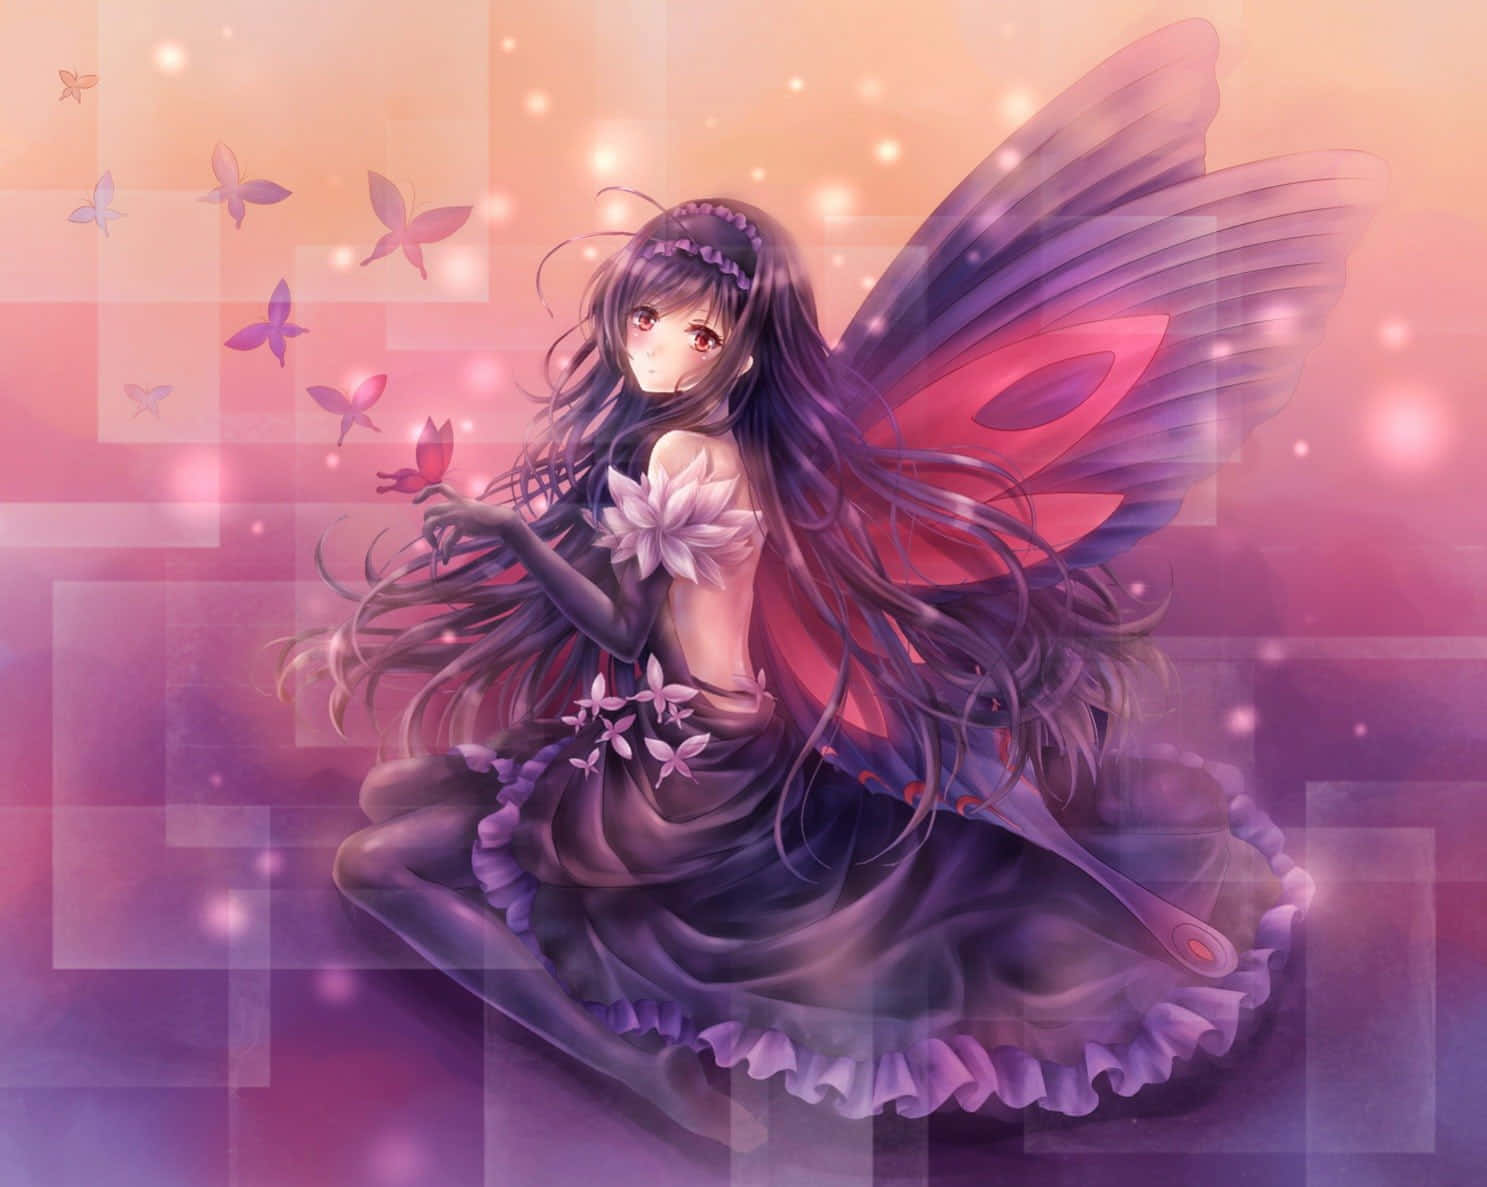 "The Enchanting Fairy"